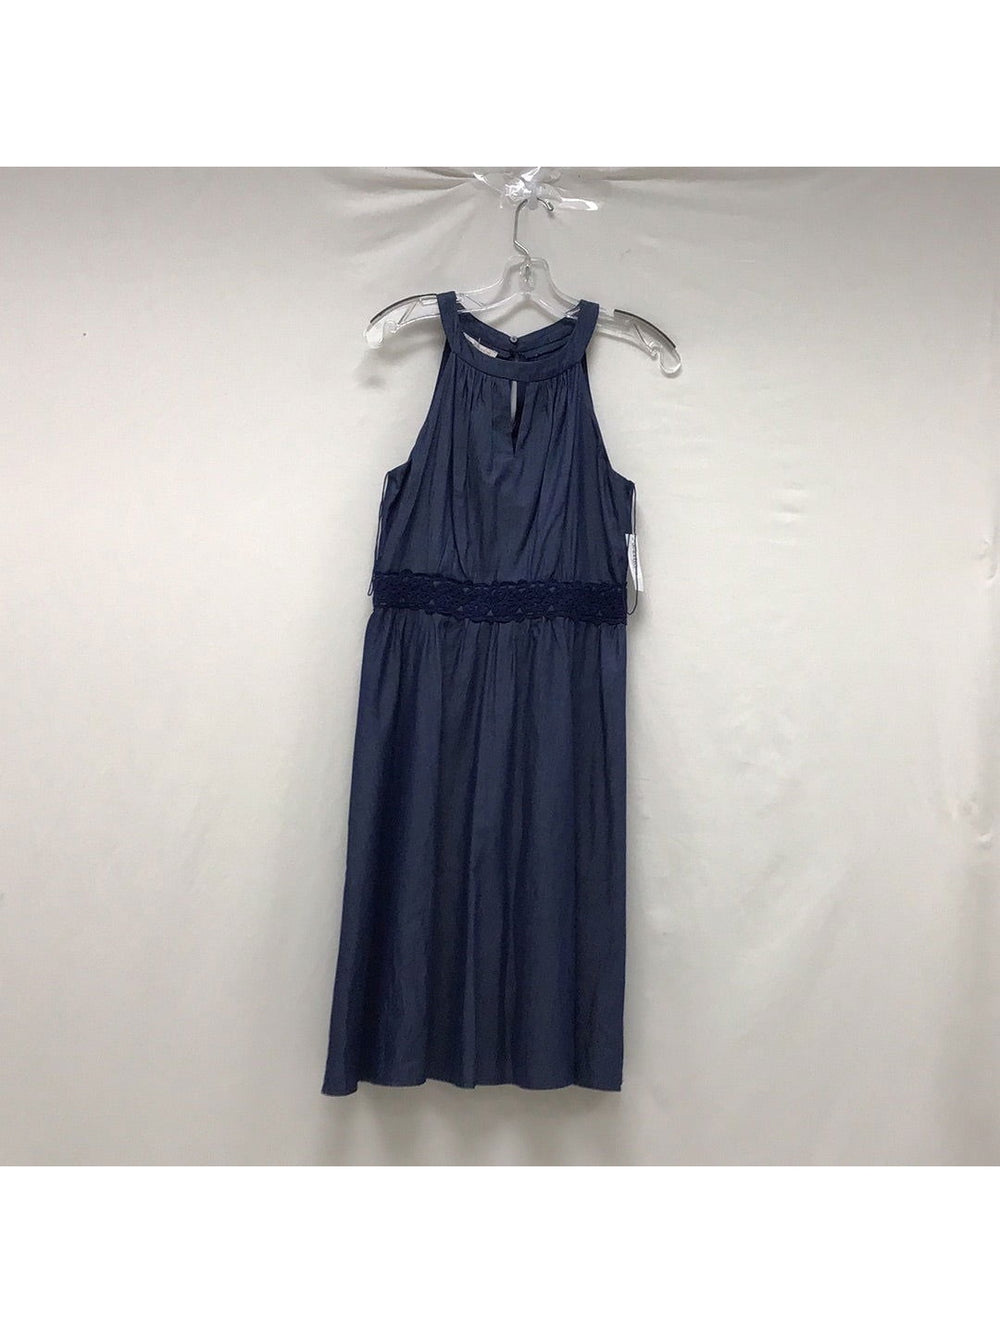 Dressbarn Ladies Size 10 Navy Blue Sleeveless Dress - The Kennedy Collective Thrift - 